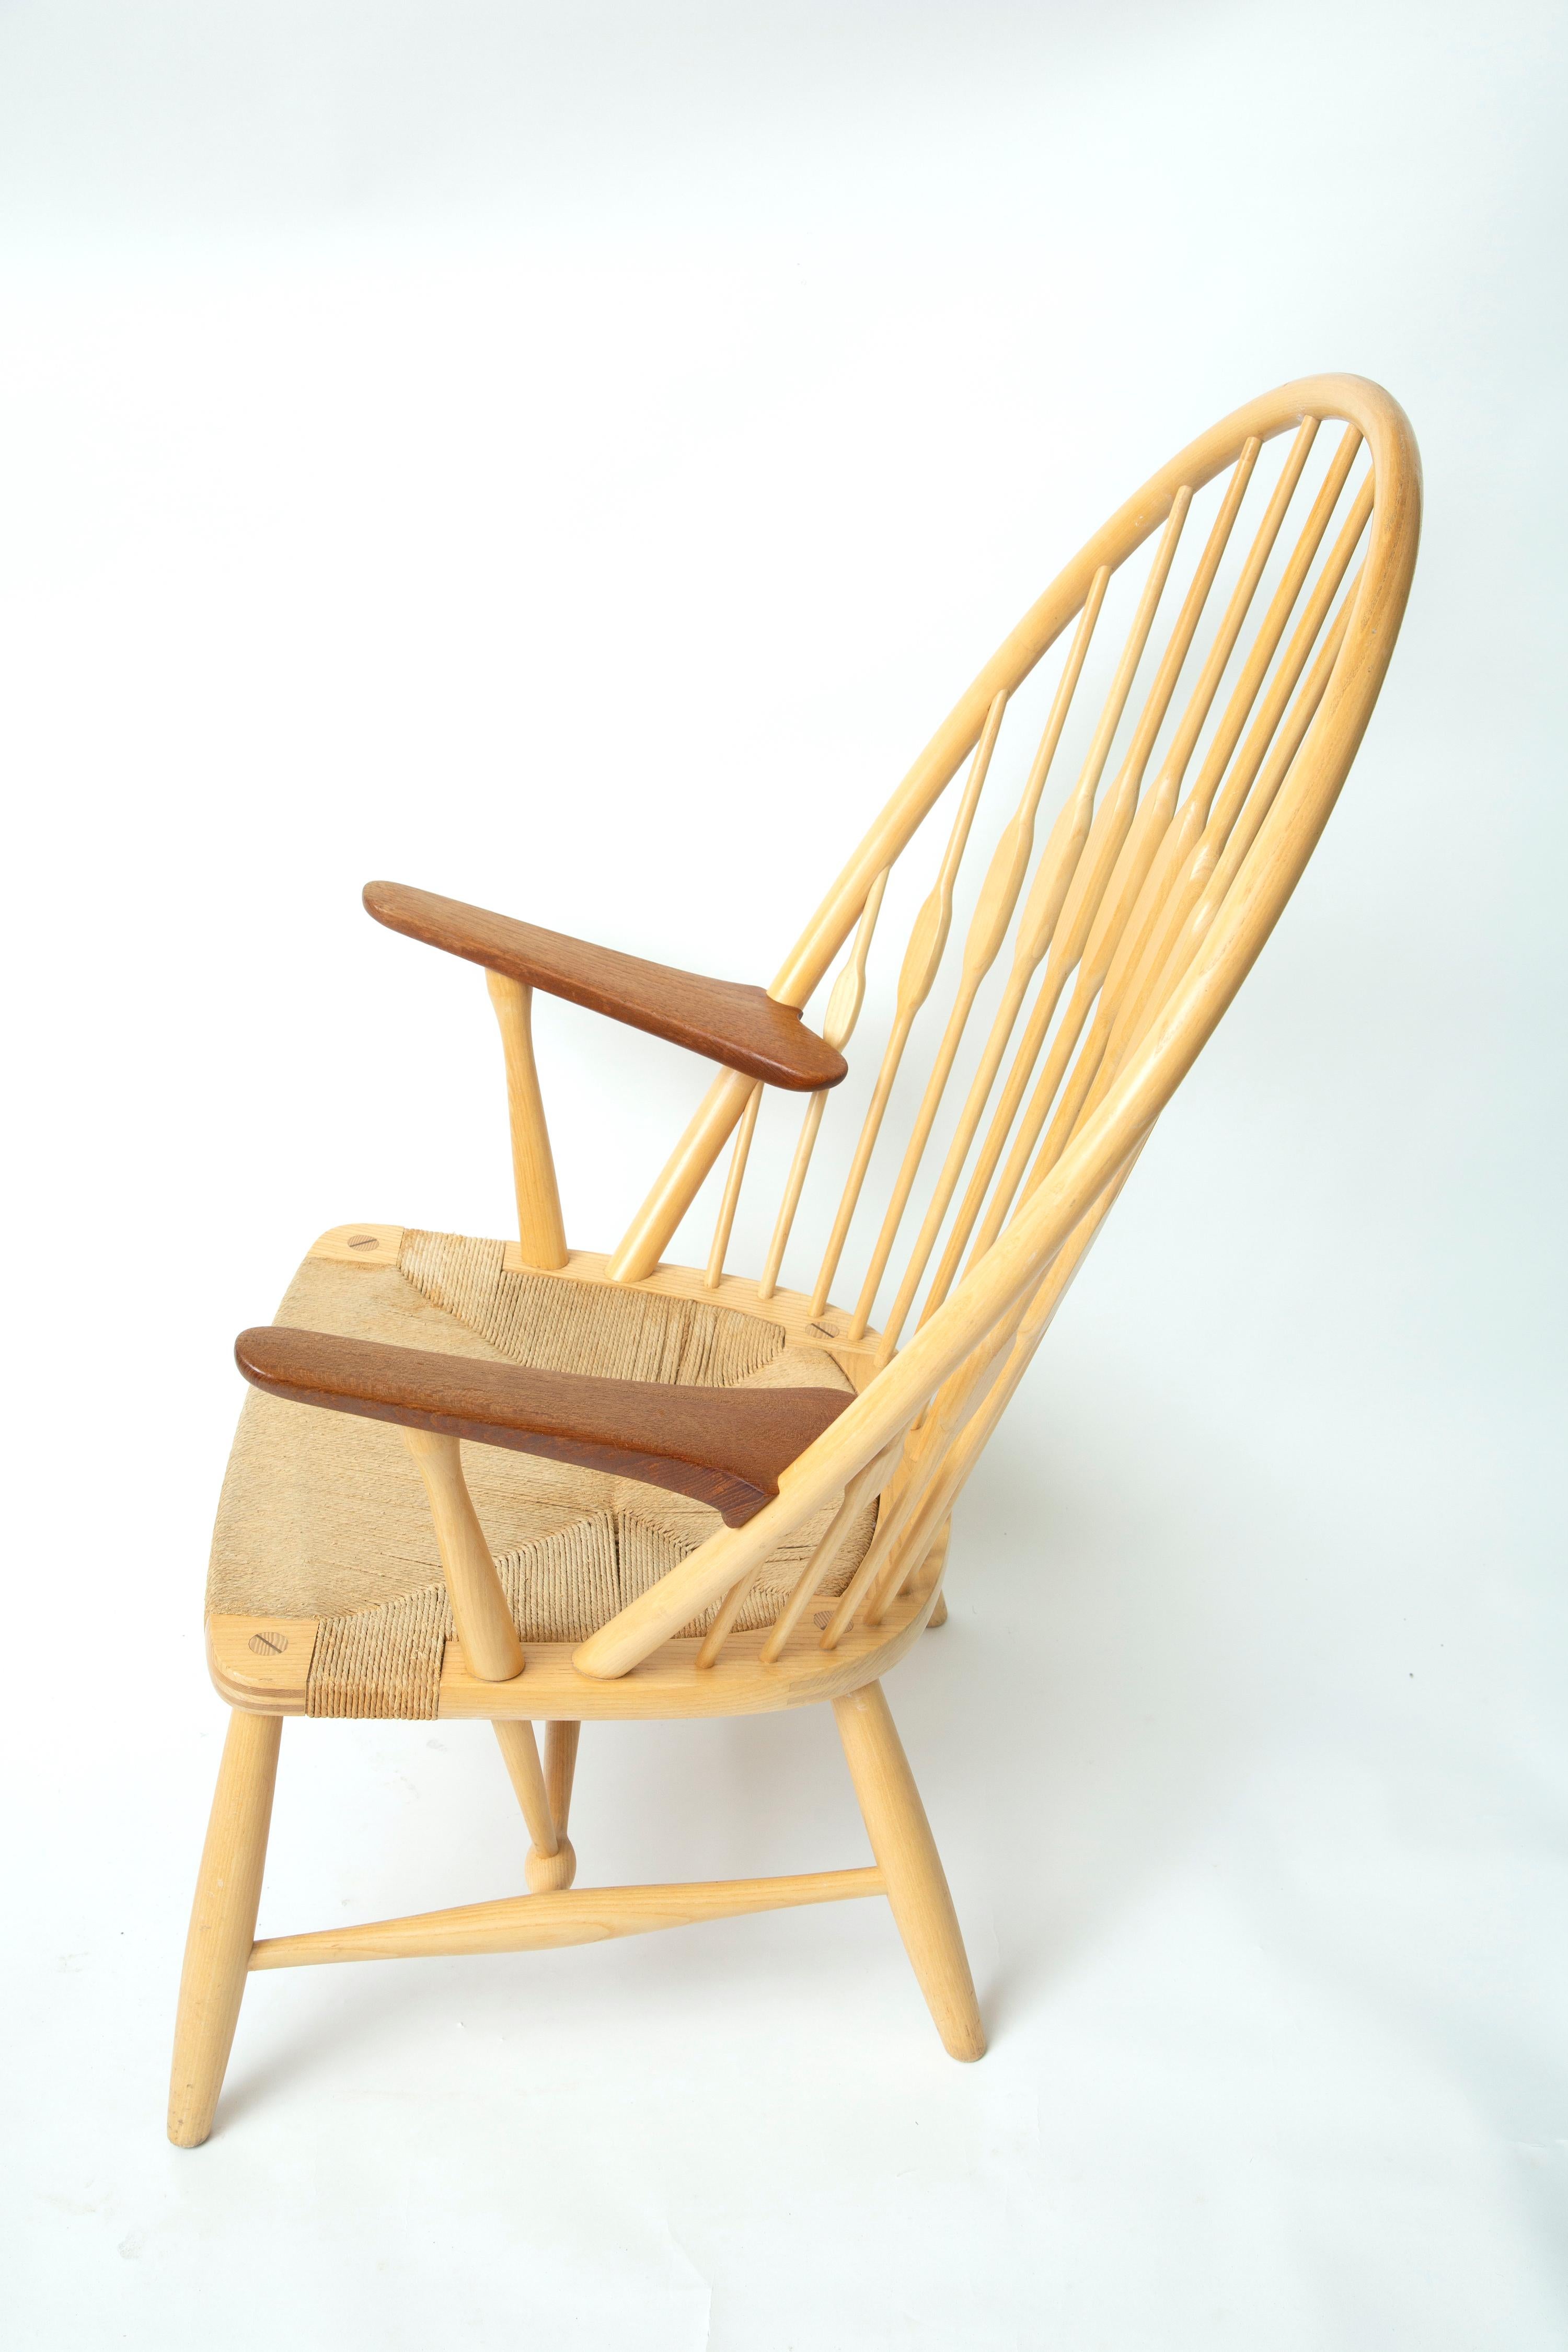 Danois Hans Wegner fauteuils paon en vente